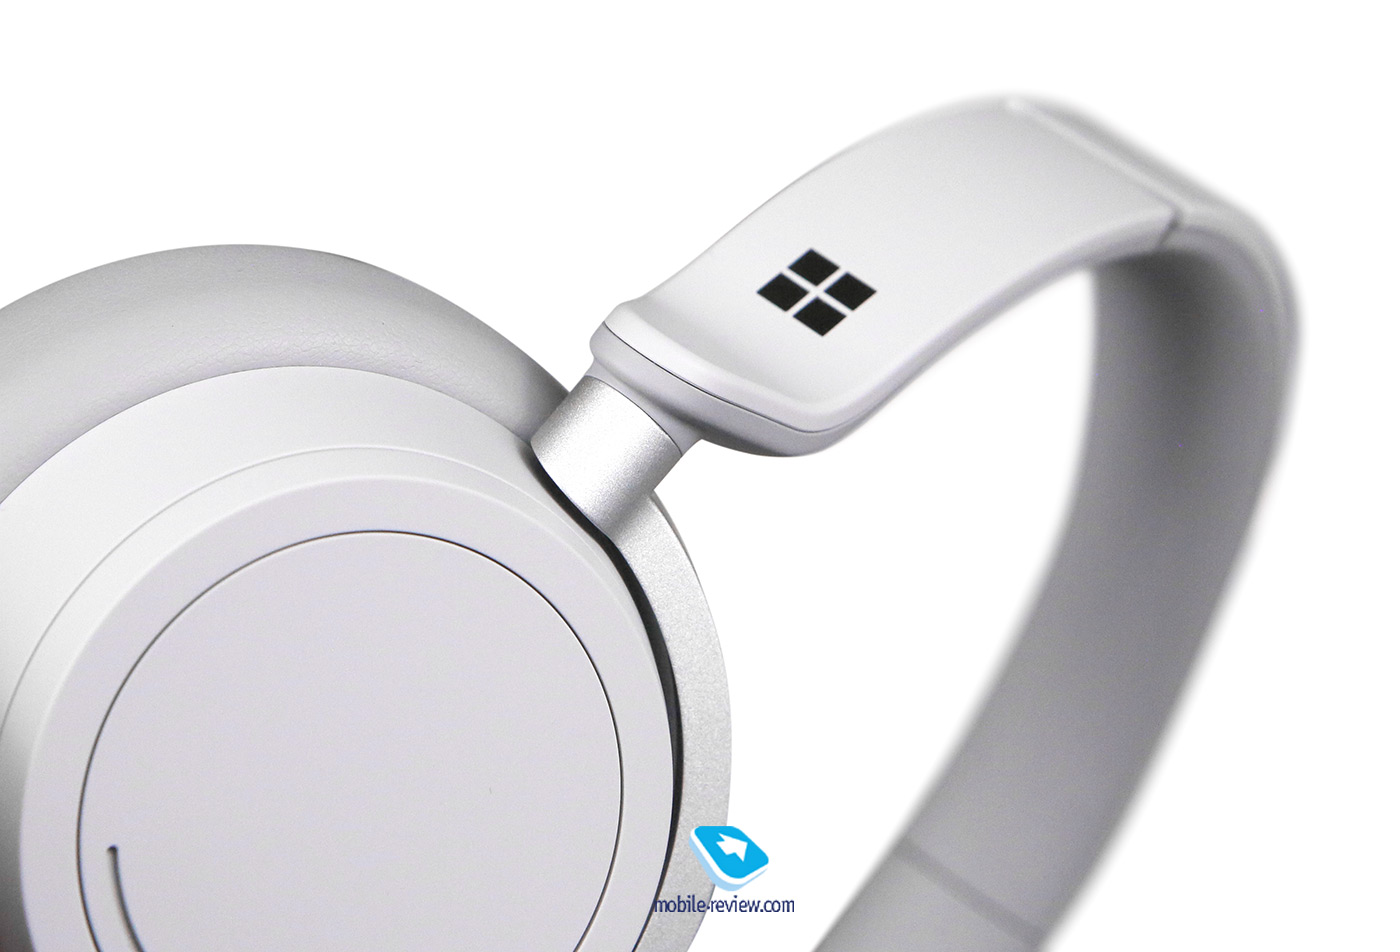      Microsoft Surface Headphones